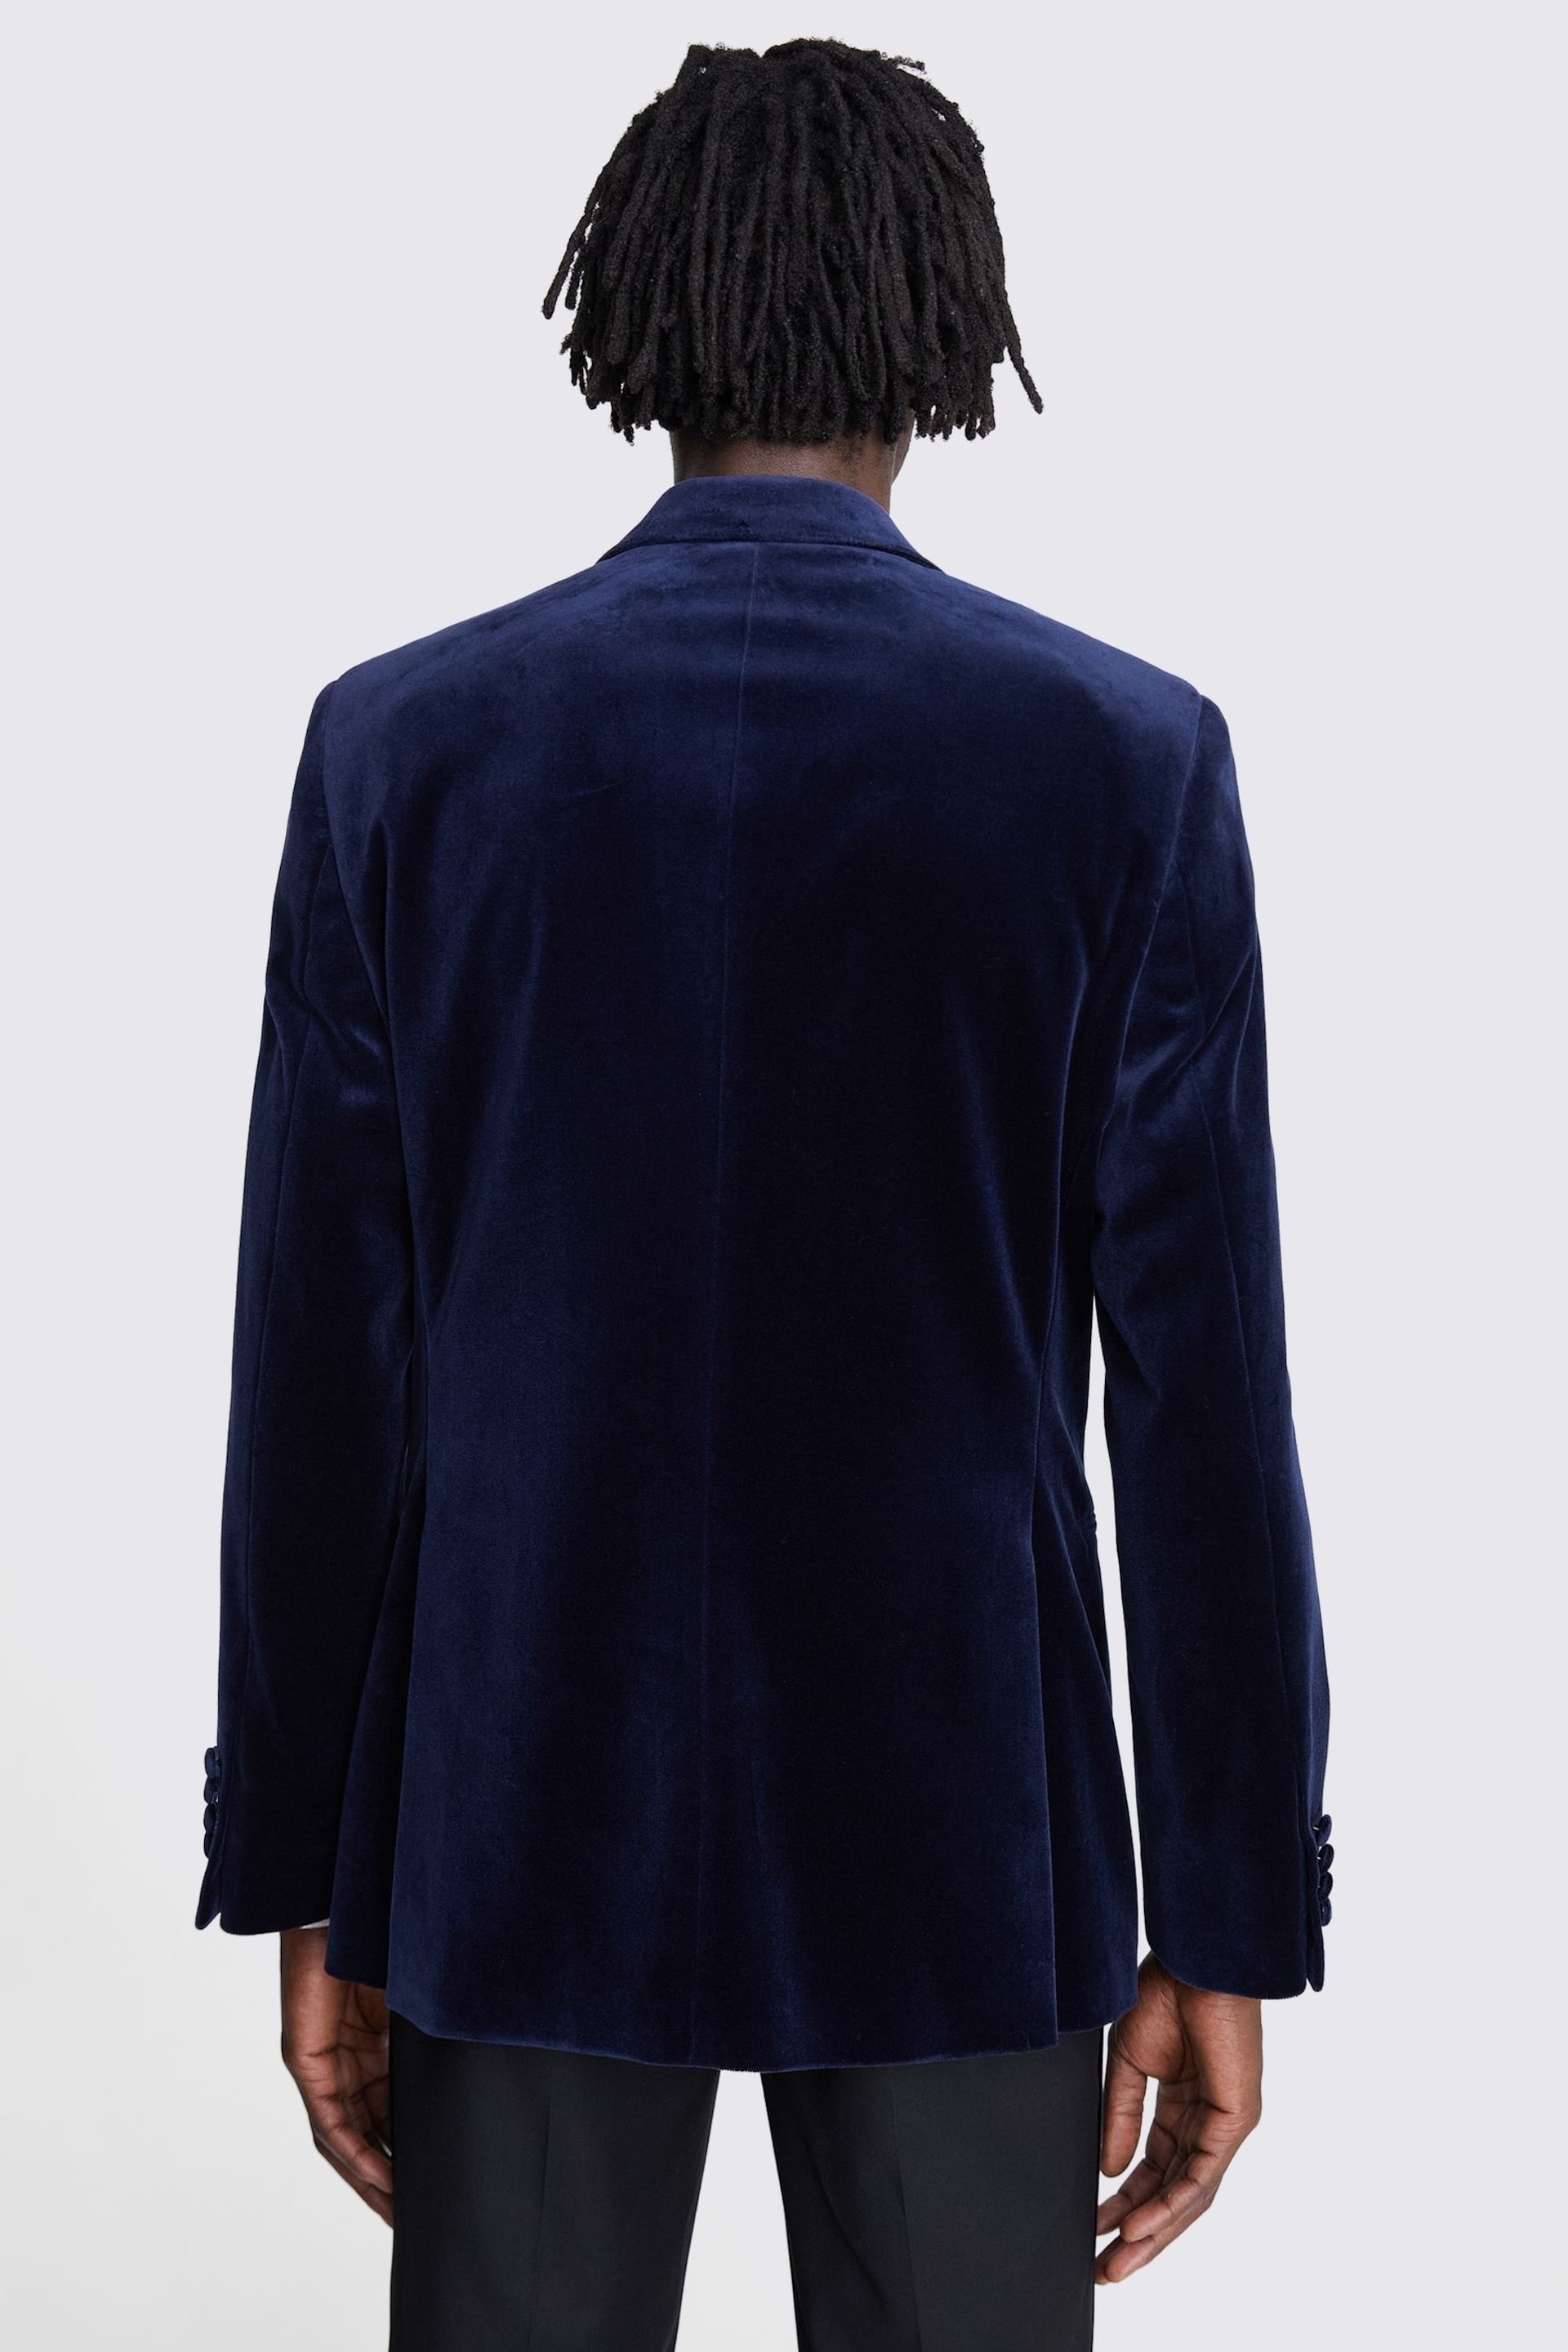 MOSS Tailored Fit Blue Velvet Jacket - Image 3 of 5